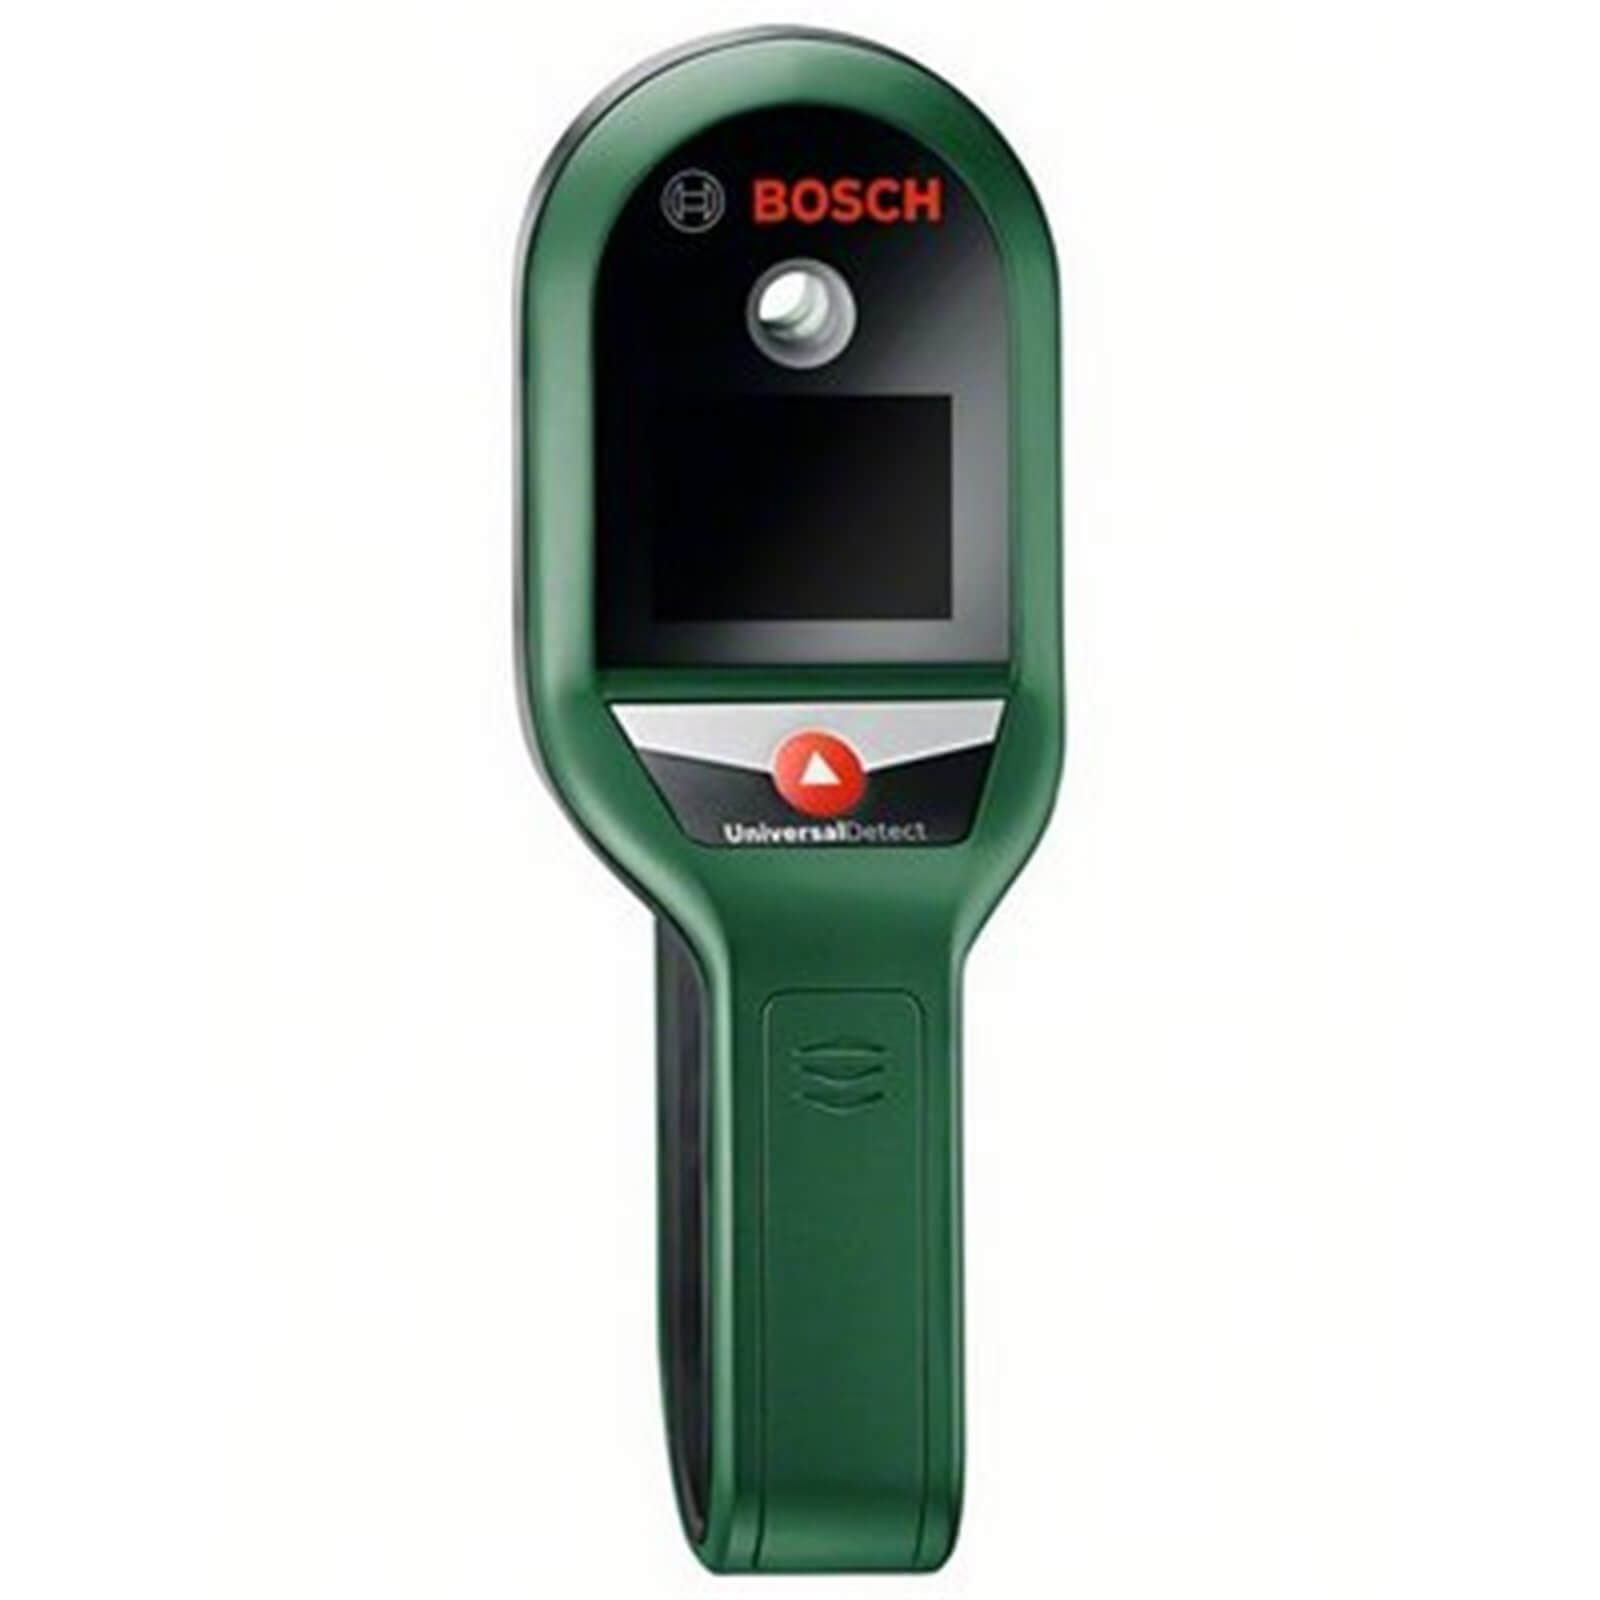 Bosch Universal Detect Detecting Tool